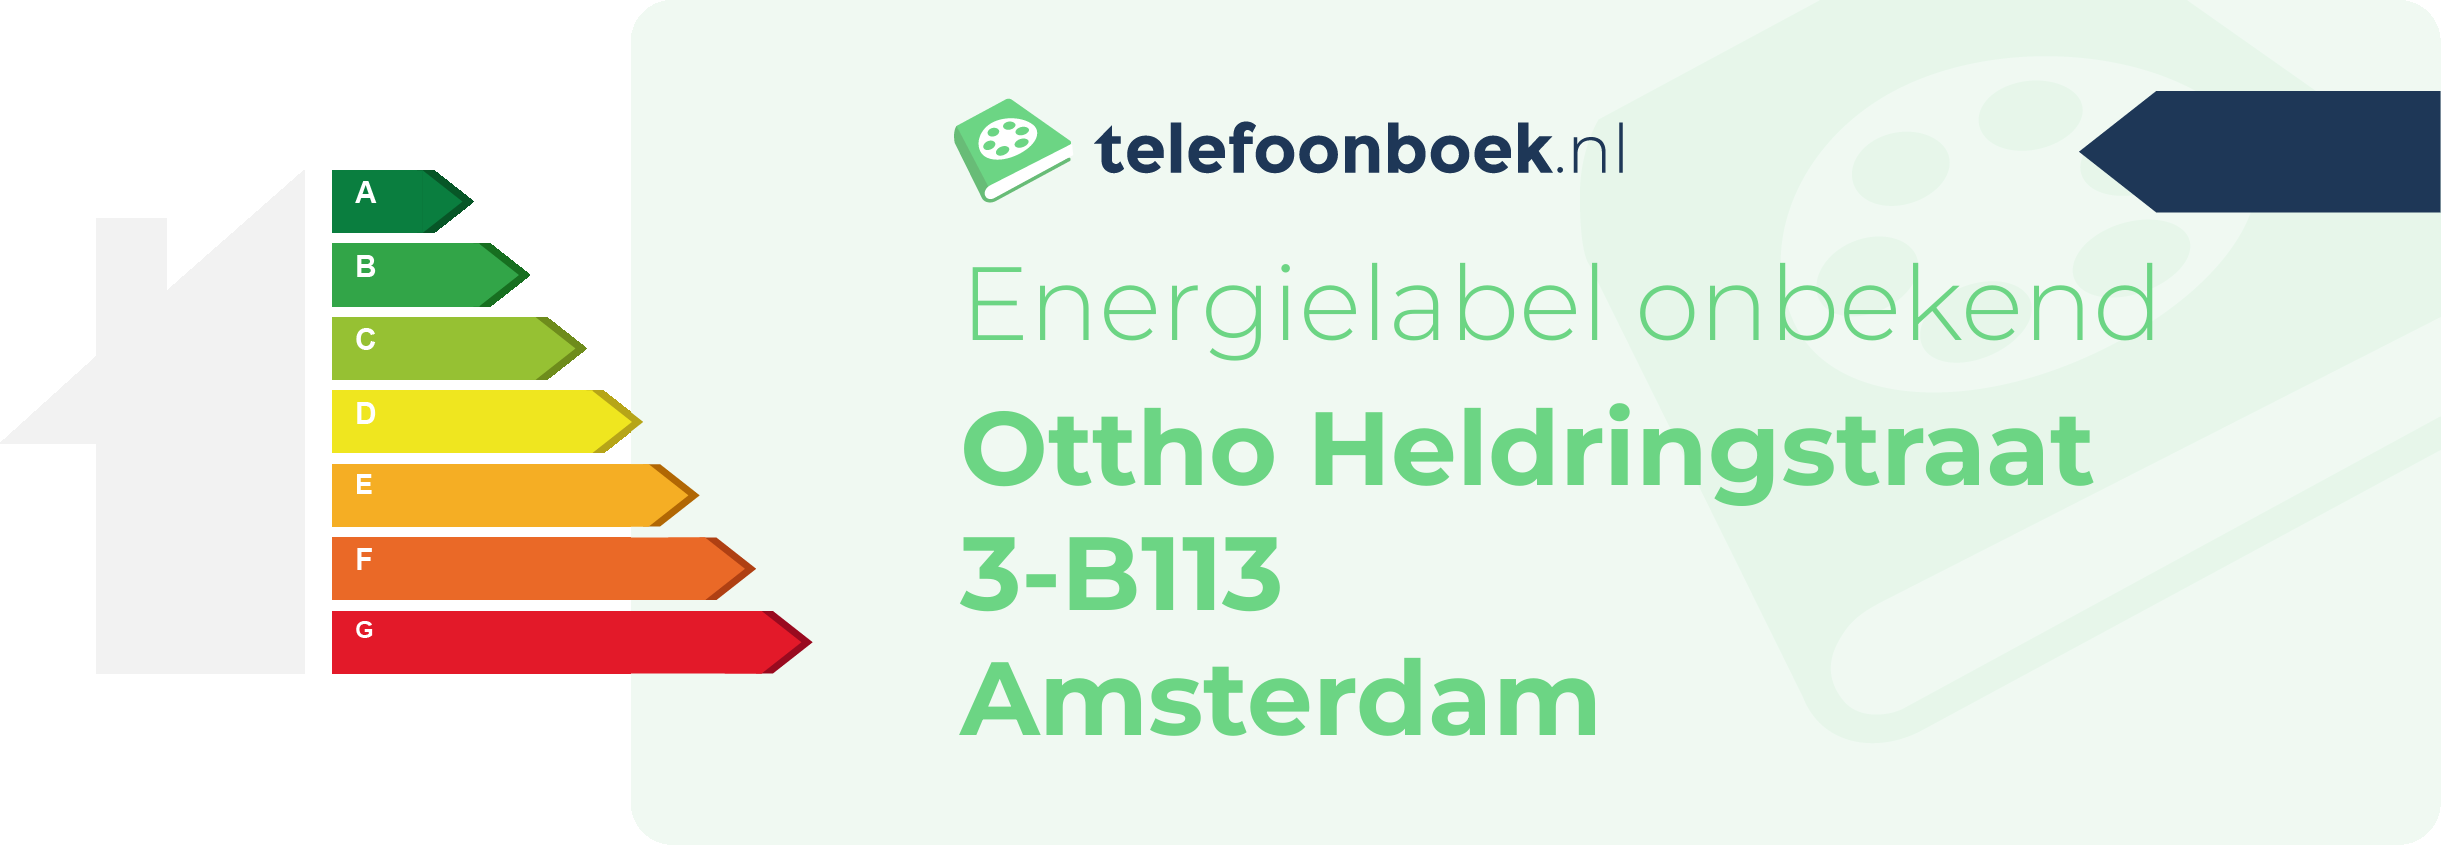 Energielabel Ottho Heldringstraat 3-B113 Amsterdam